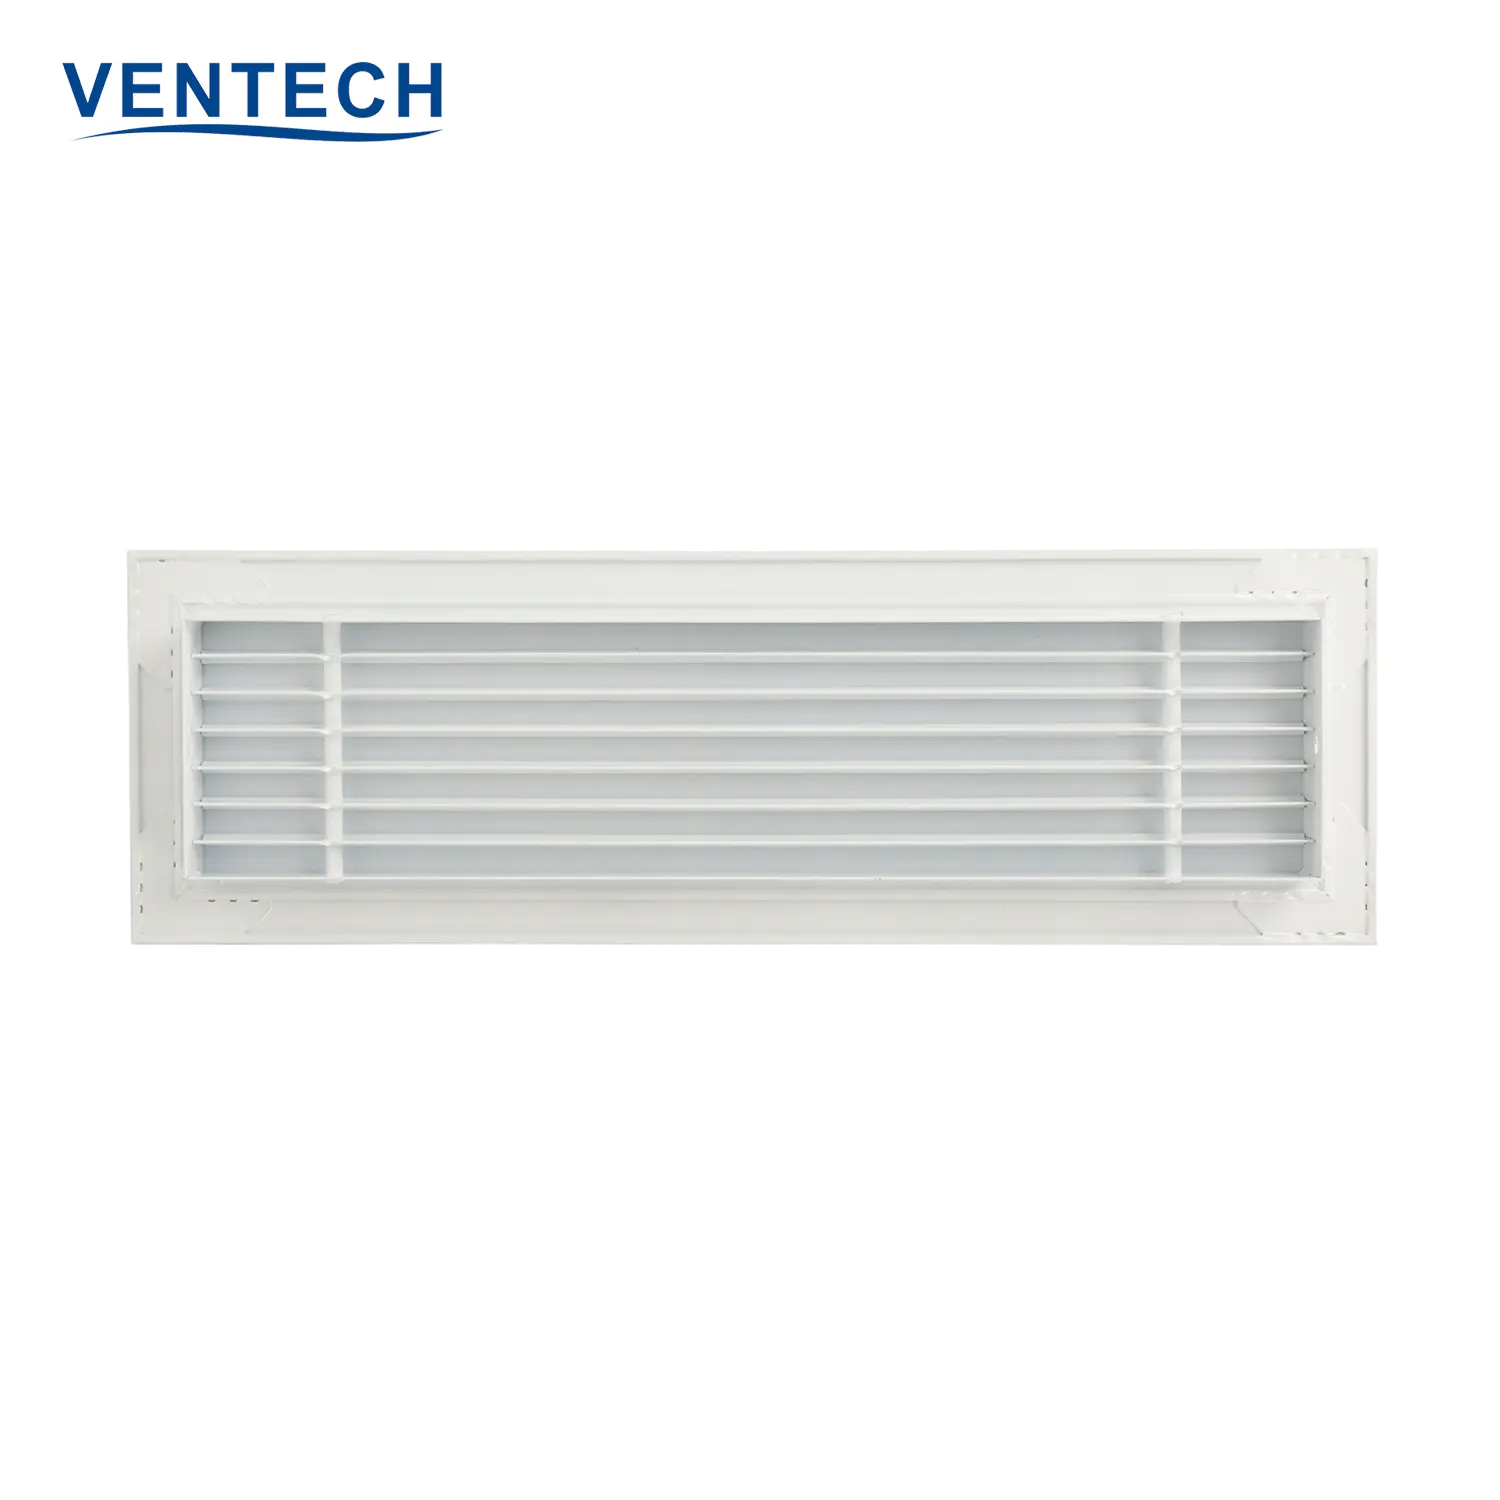 Ventech Hvac Aluminum Sheet Profiles Linear Bar Air Grille for Ceiling Vents